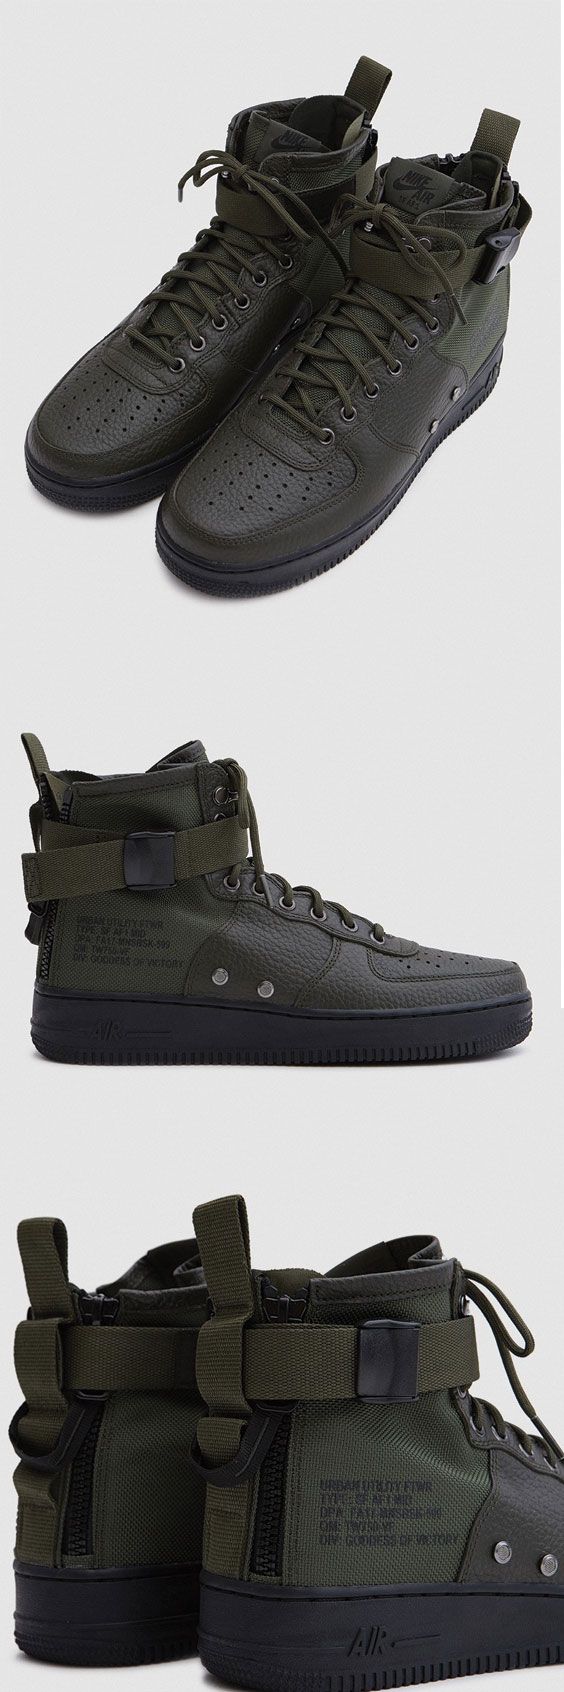 Nike SF Air Force 1 Mid Shoe in Sequoia Black $160